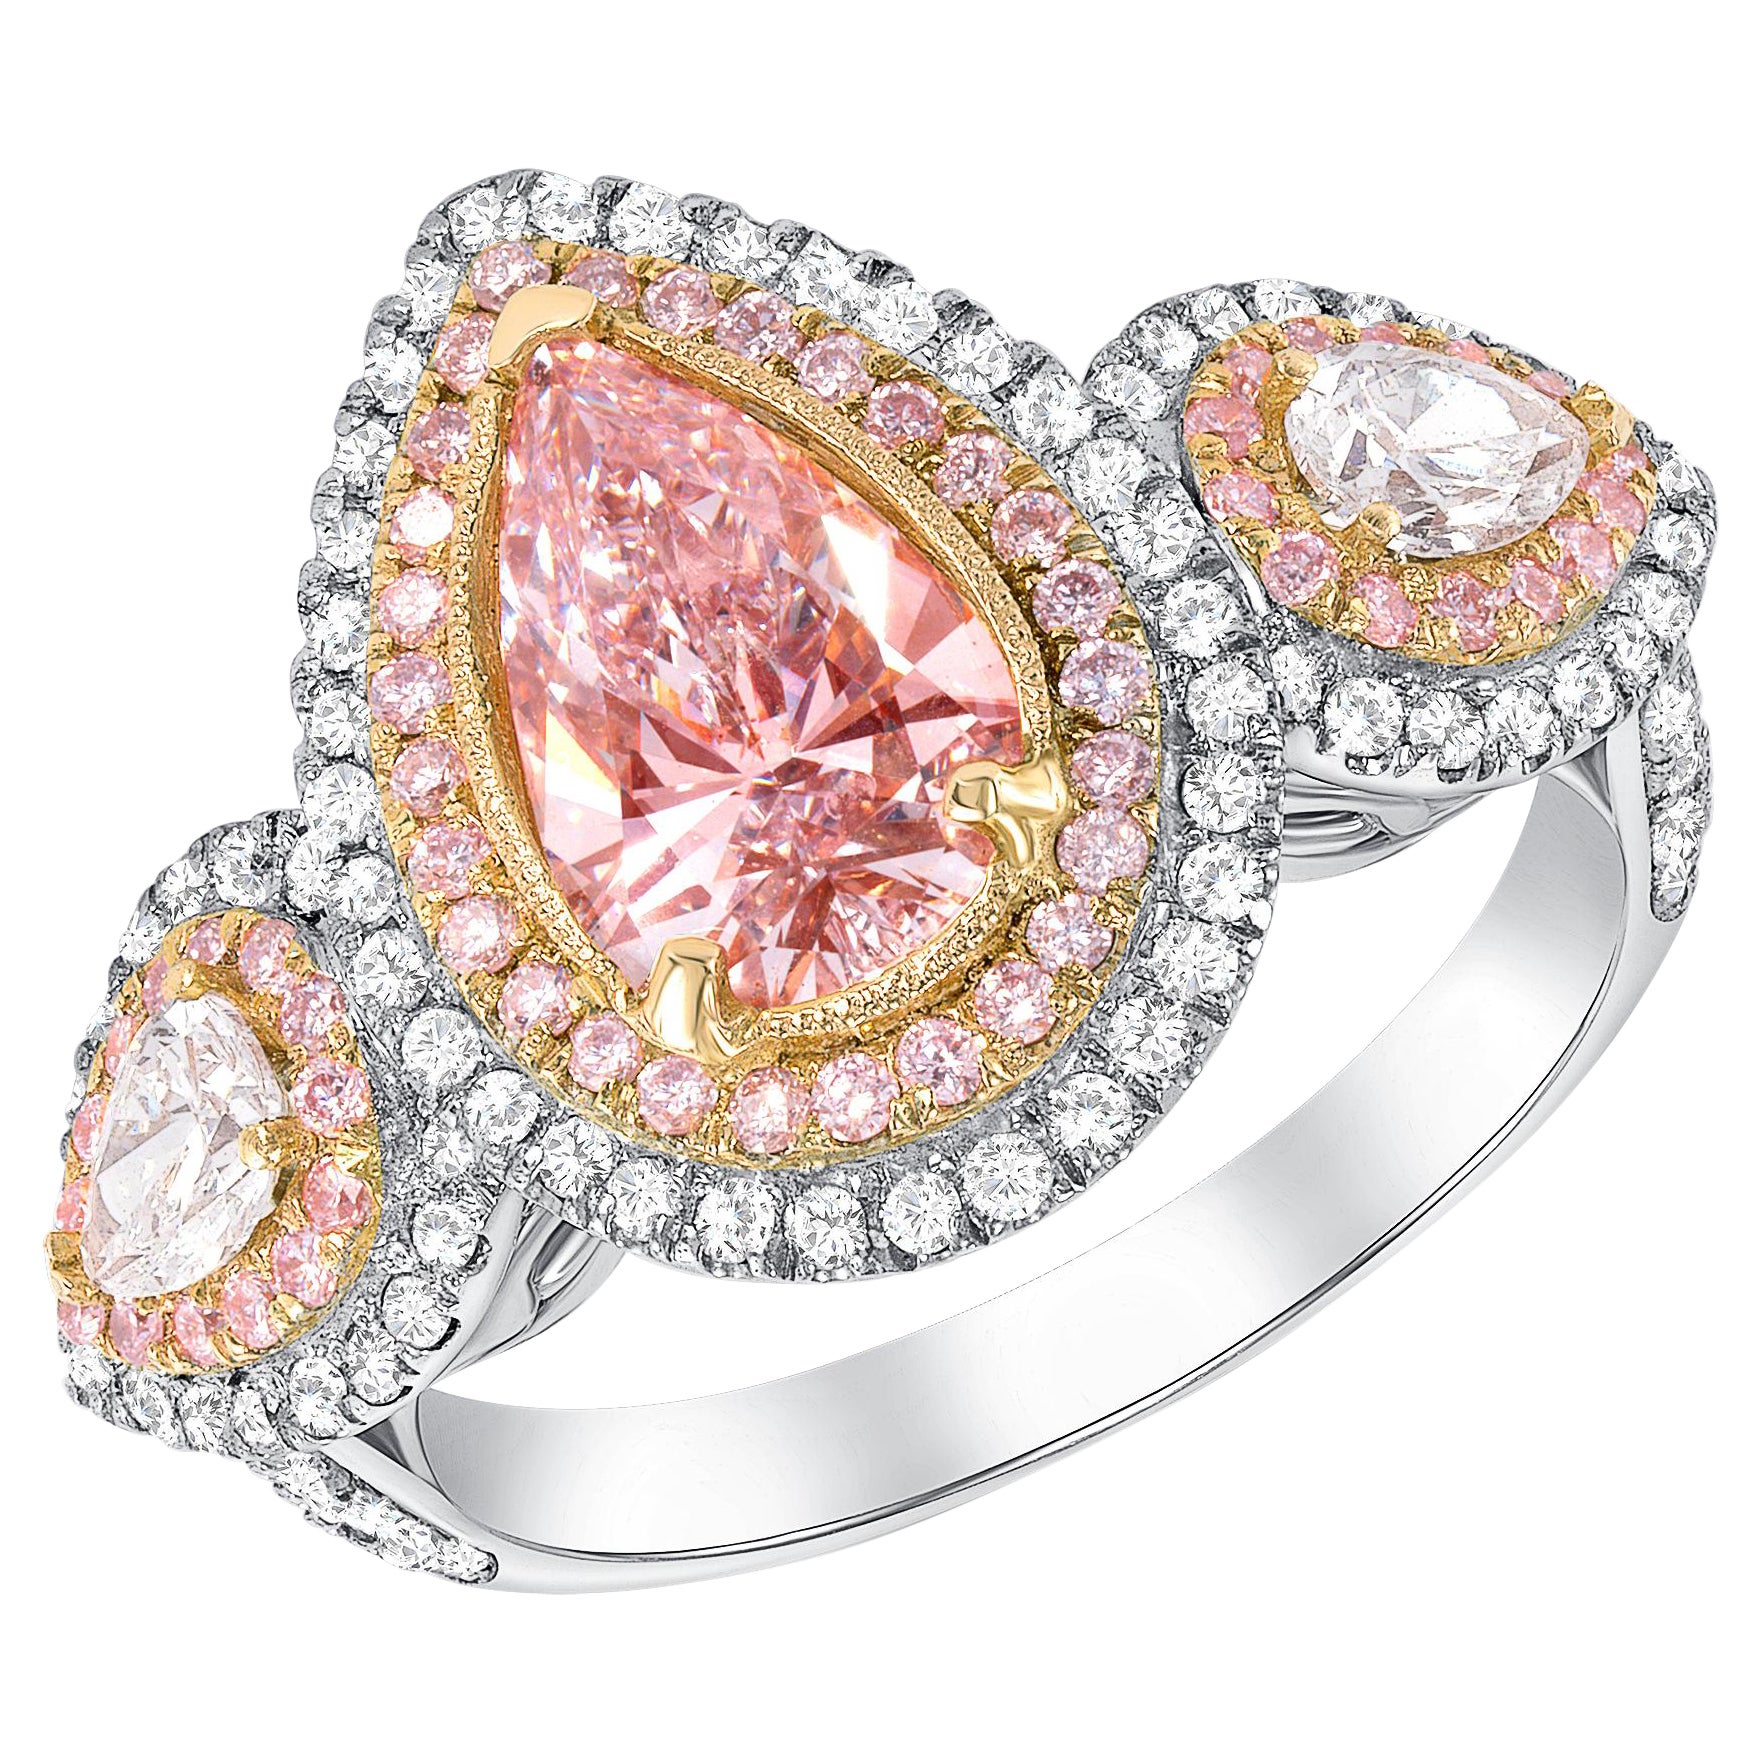 2.55 Carat 3 Stone Fancy Light Pink Pear Shaped Diamond Engagement Ring